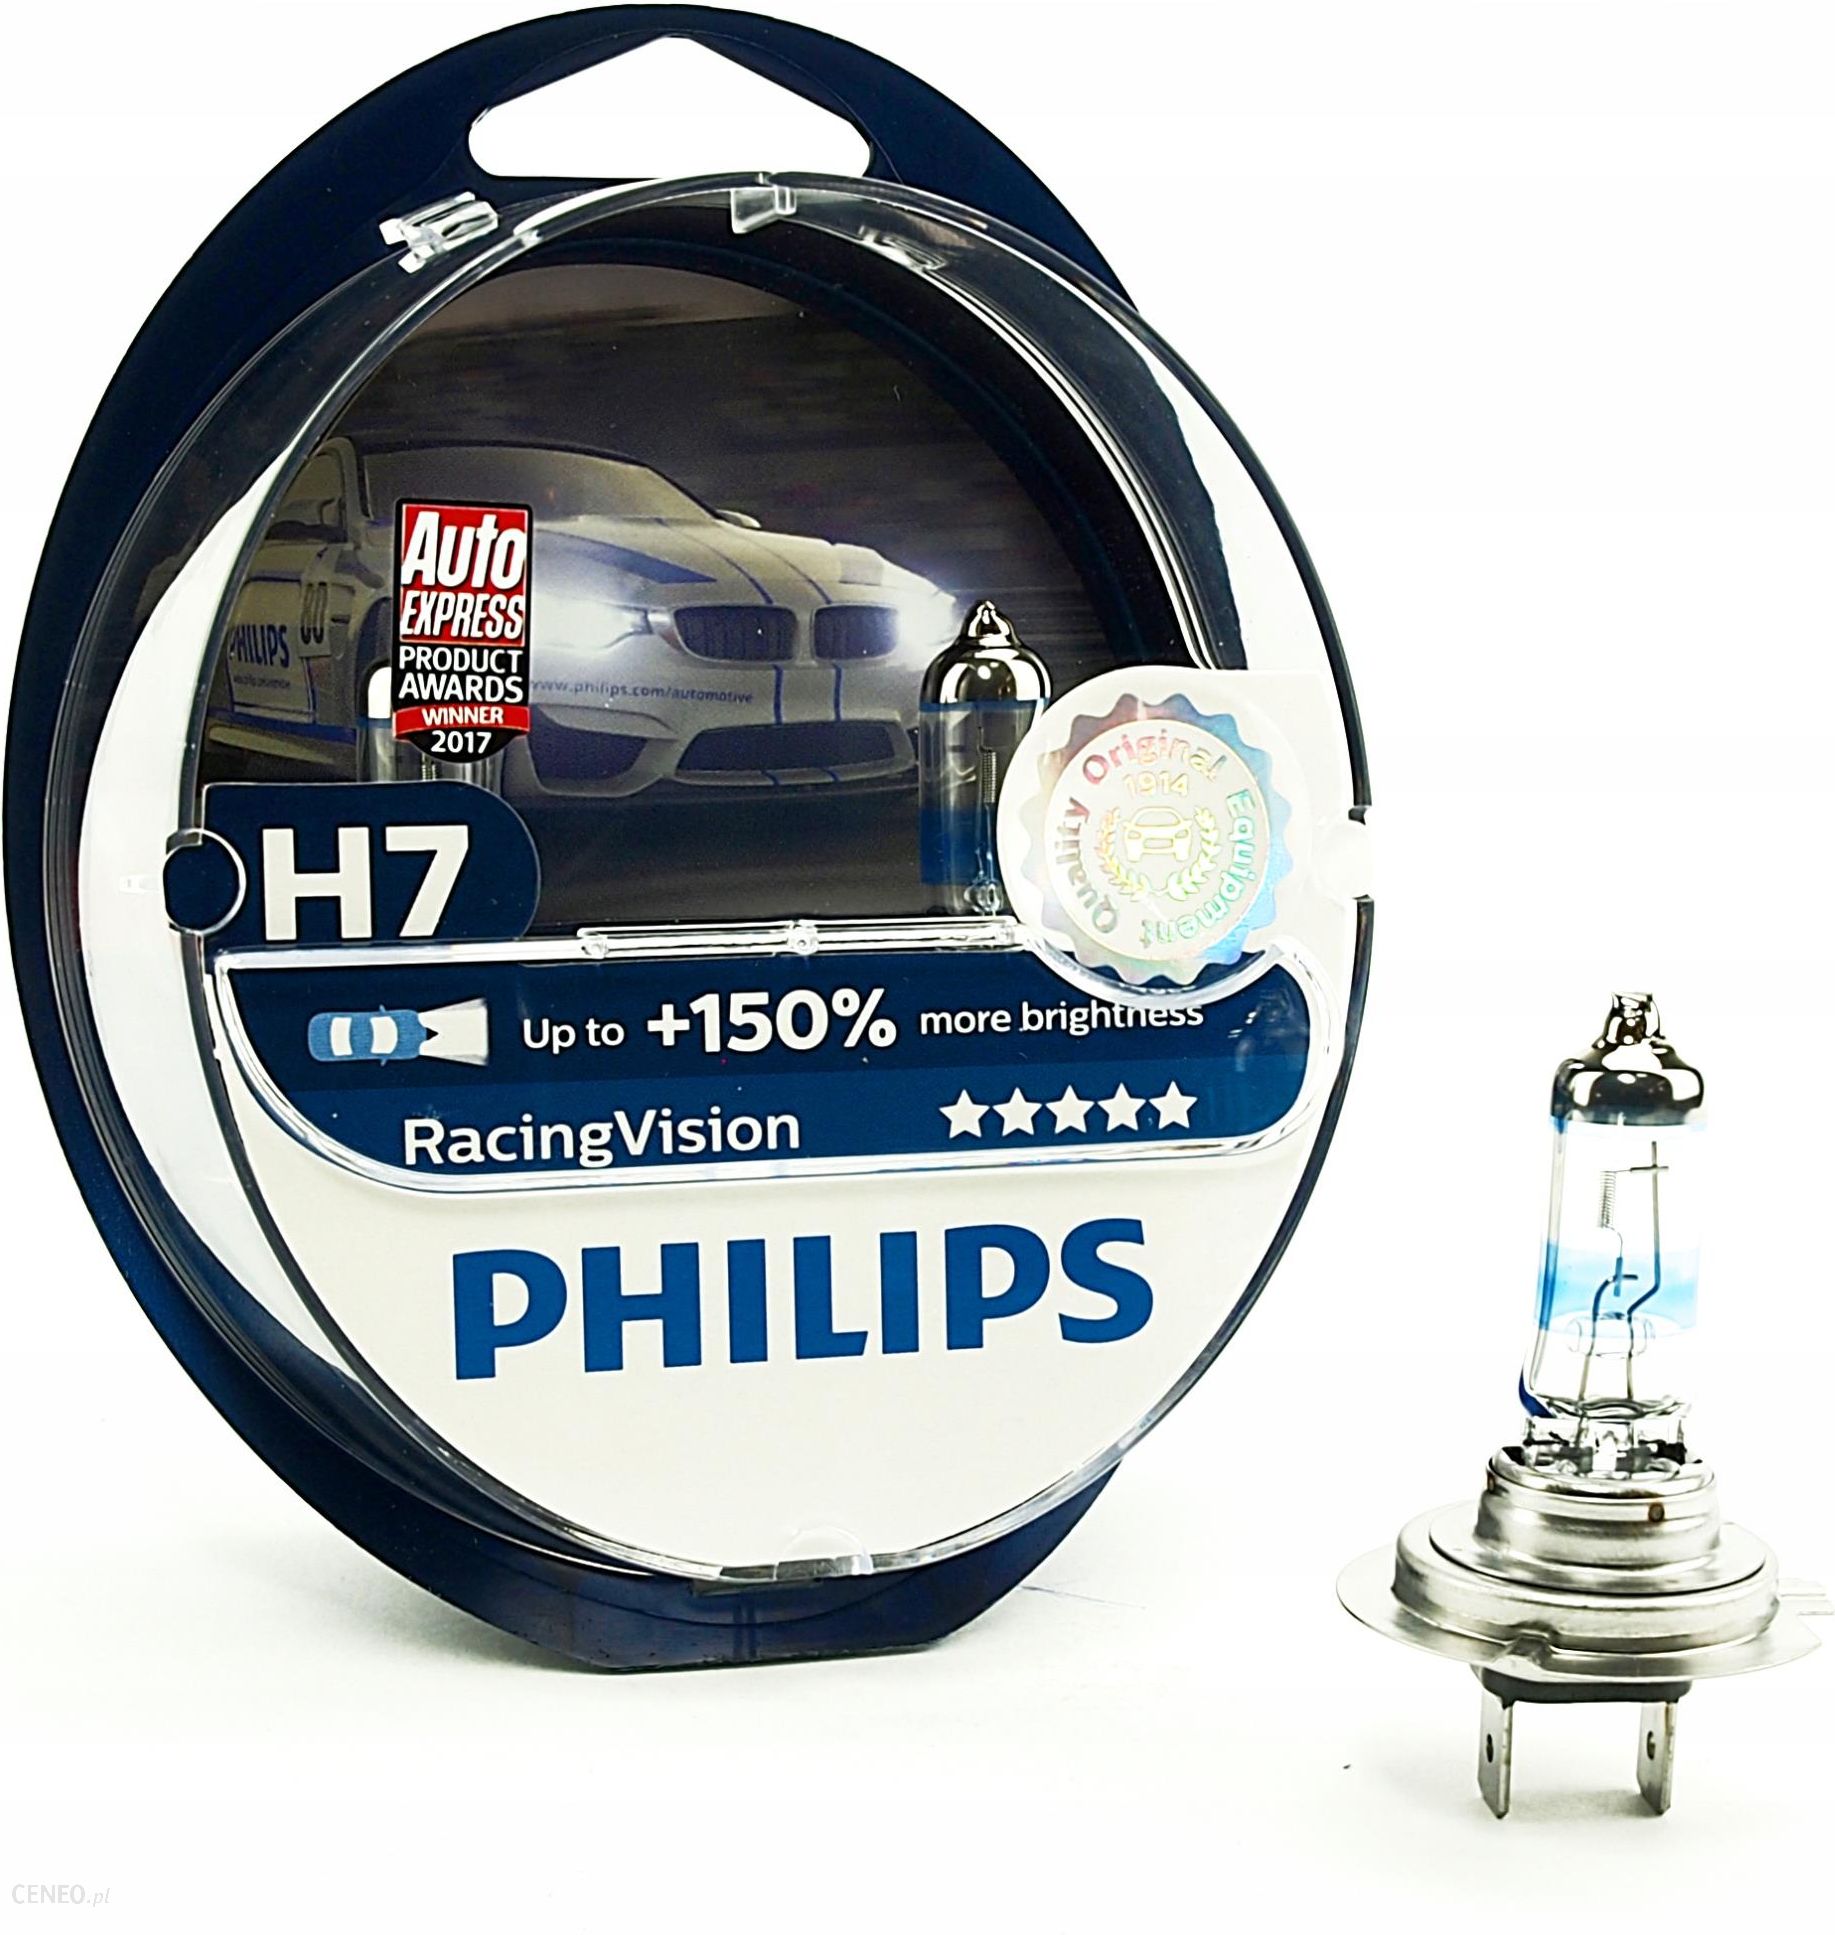 Филипс вижн. H7 Philips RACINGVISION +150. Лампы Филипс h7 рейсинг Вижн 150. Philips лампы h7 +150. Лампа Philips Racing Vision h7.